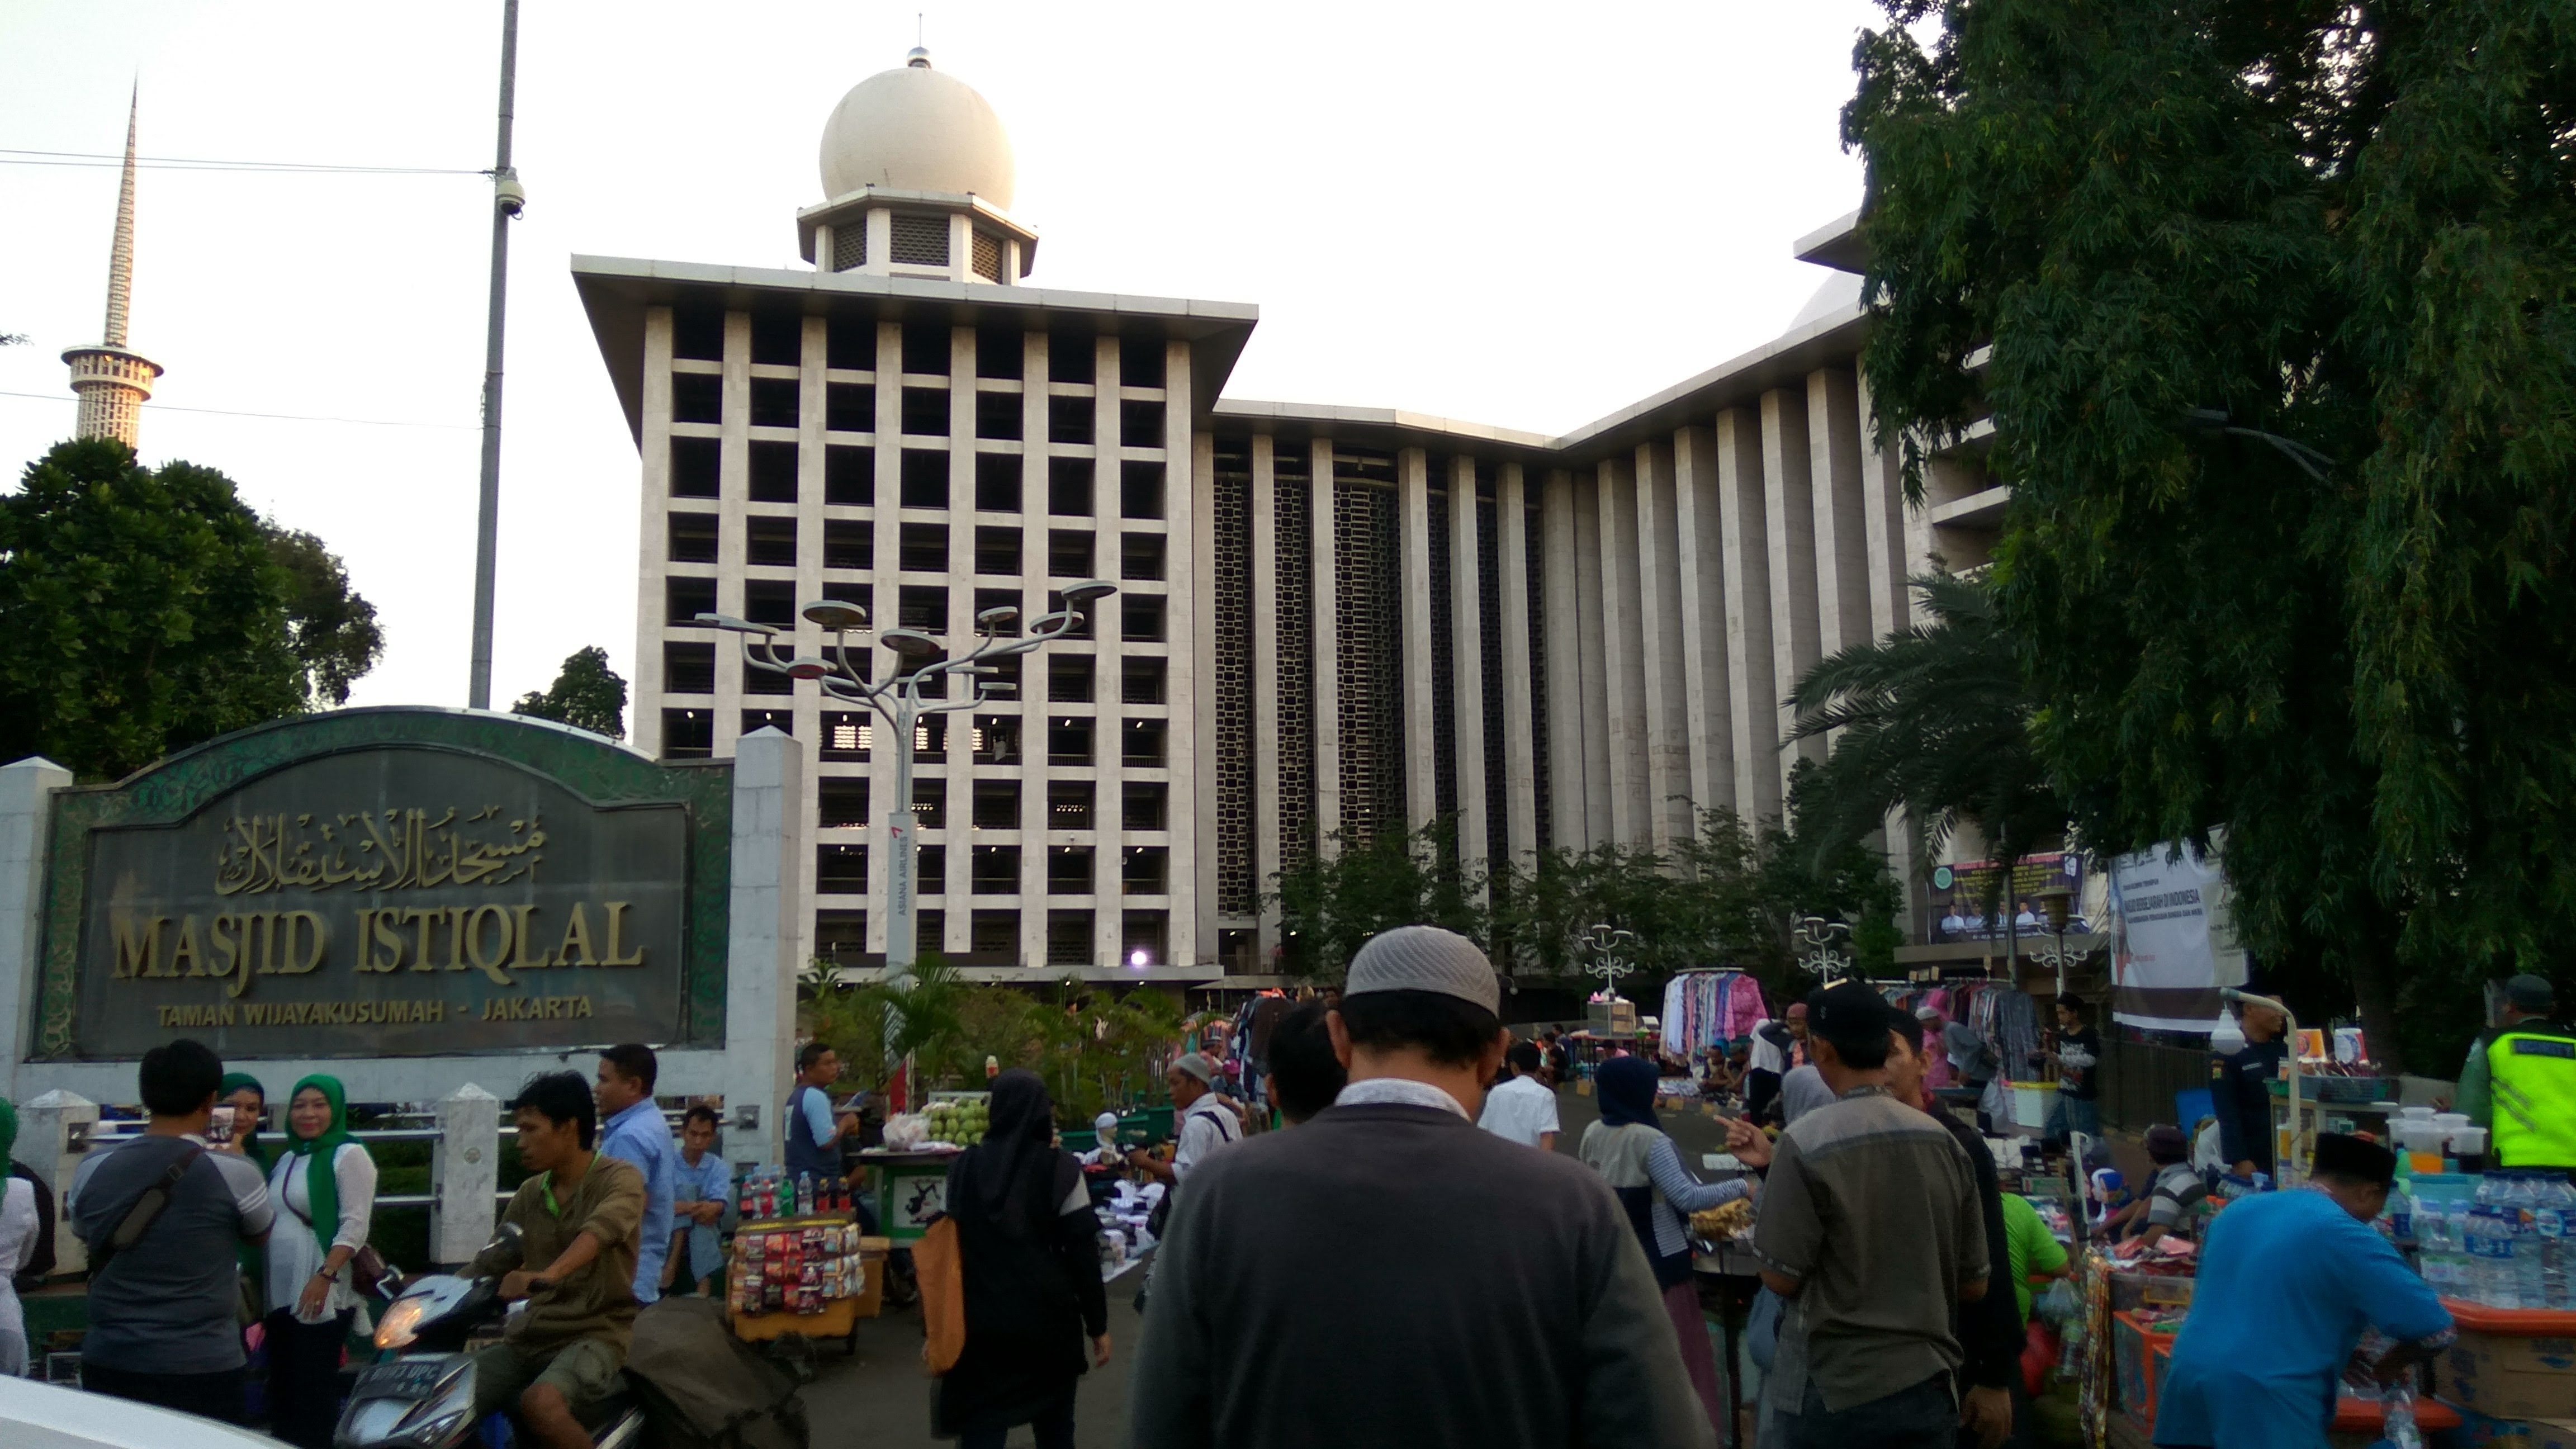 Masa pandemi tidak memungkinkan untuk beribadah di masjd keren, seperti Istiqlal. Untuk melepas rindu, bisa mengikuti wisata virtual jelajah masjid keren di Jakarta (dok.windhu)